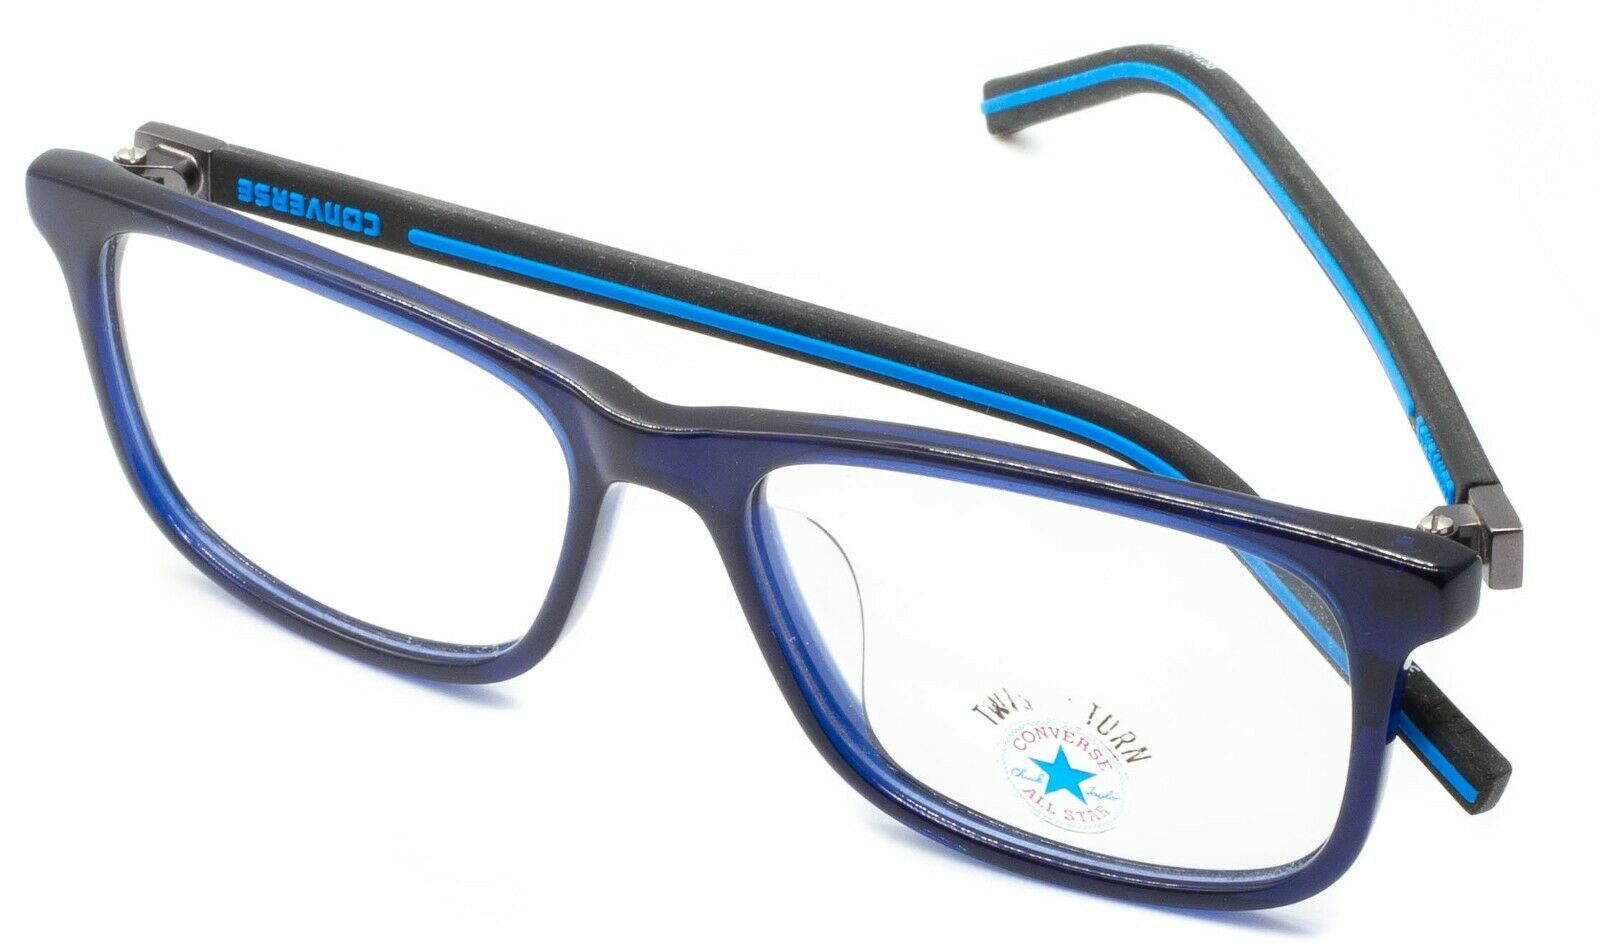 Converse All Star Teen 4 30514188 51mm Glasses RX Optical Eyewear Eyeglasses-New